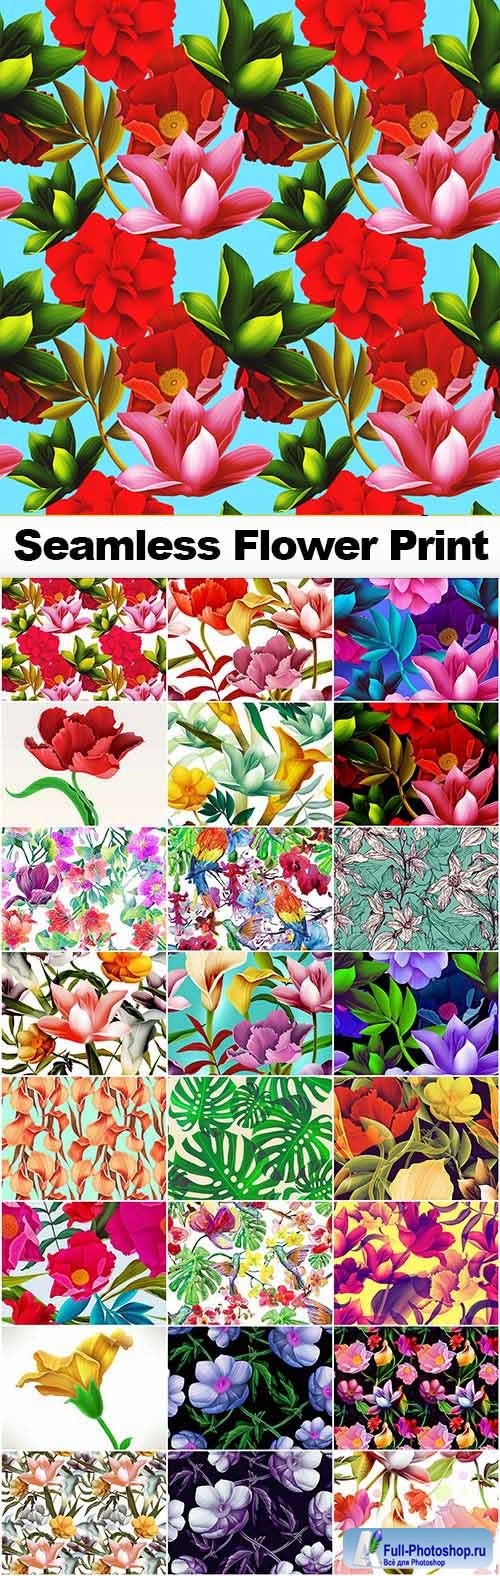 Seamless Flower Prints SP